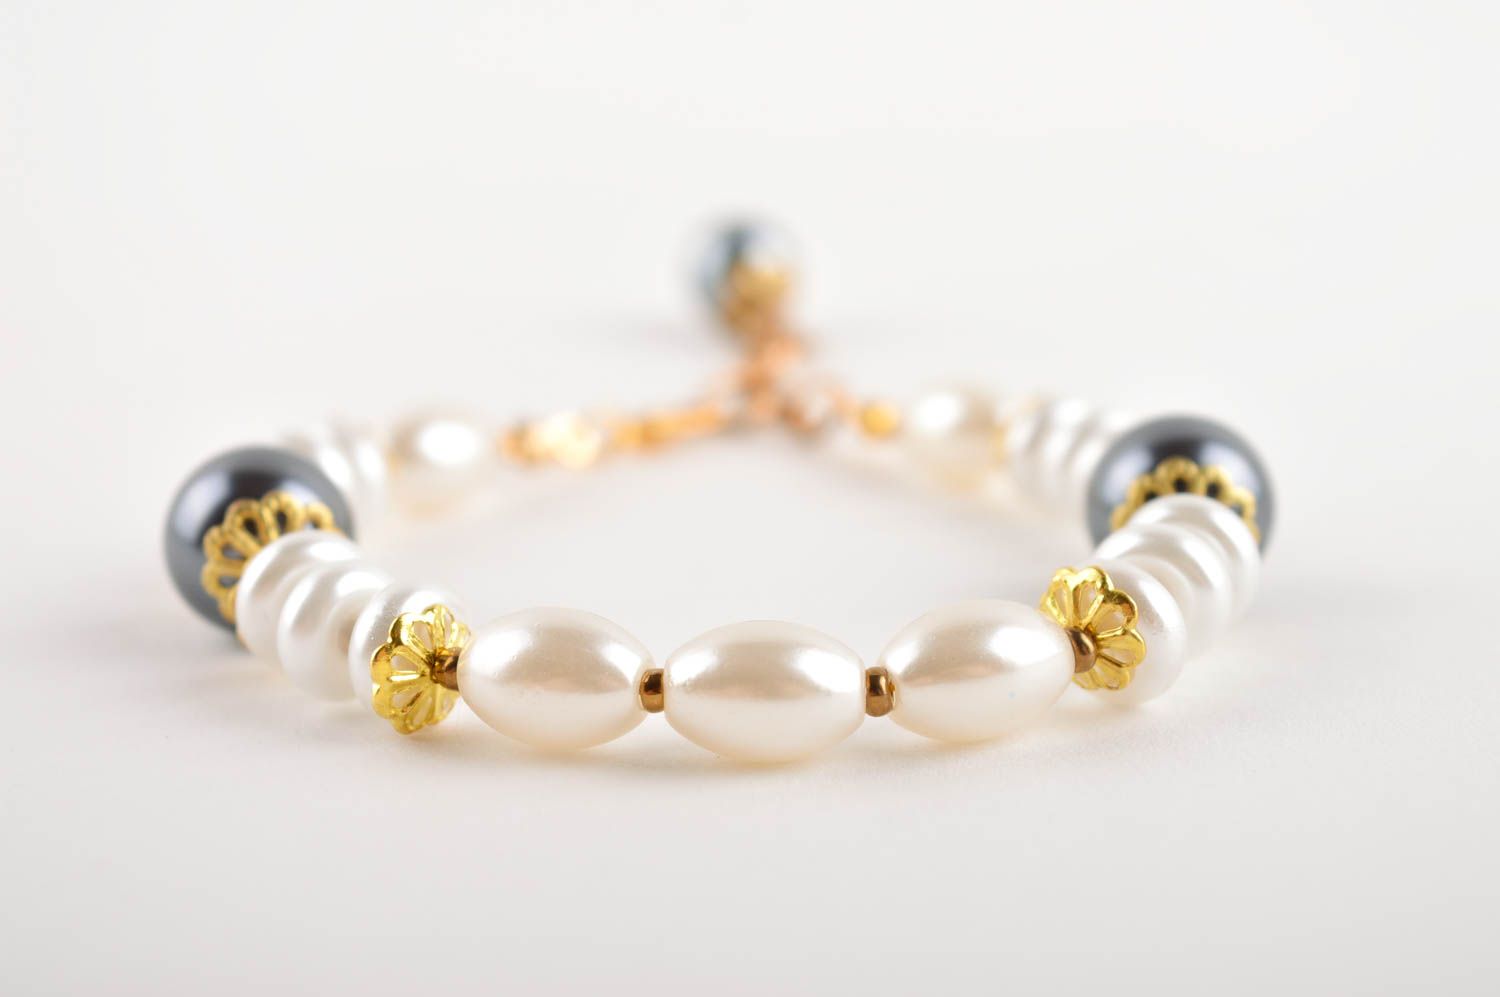 Handmade bracelet on chain evening accessory stylish jewelry present for women photo 3